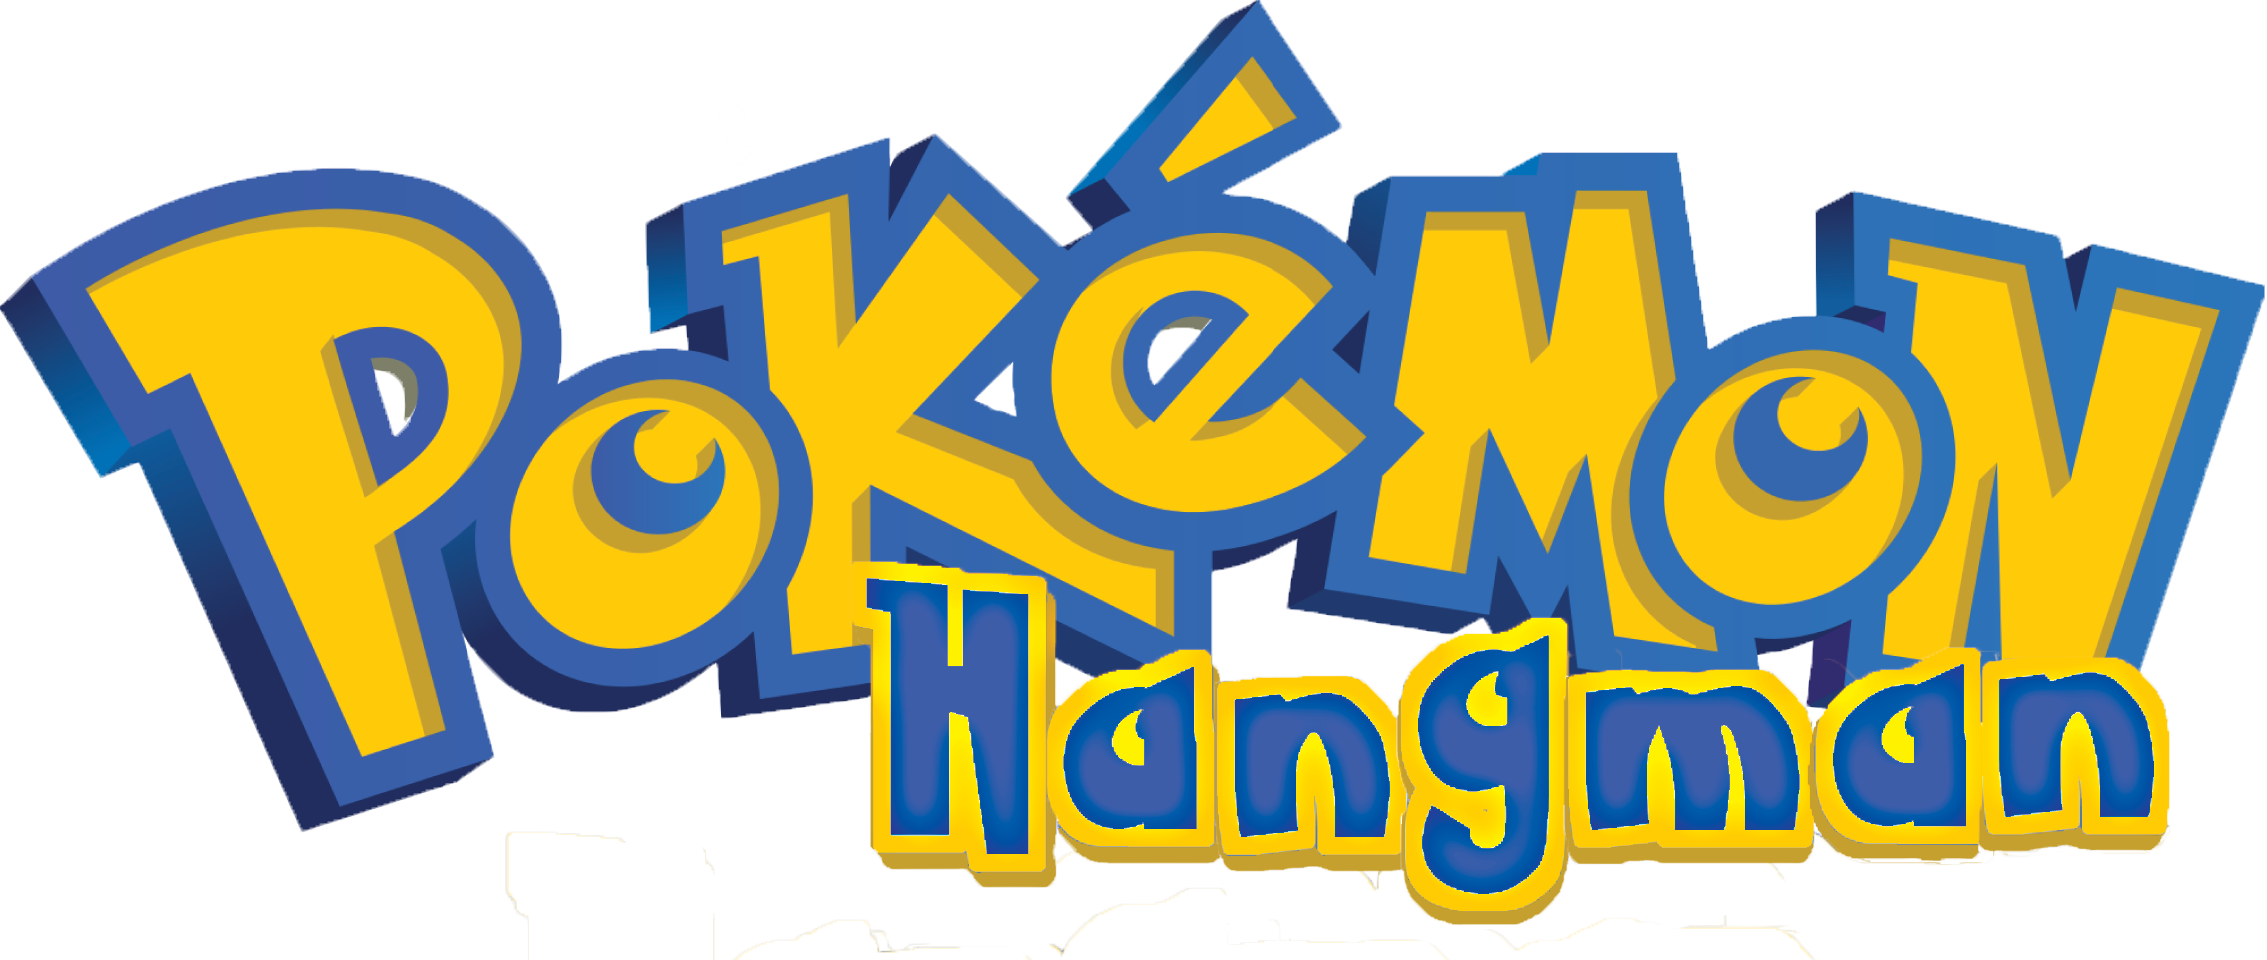 Pokemon Hangman